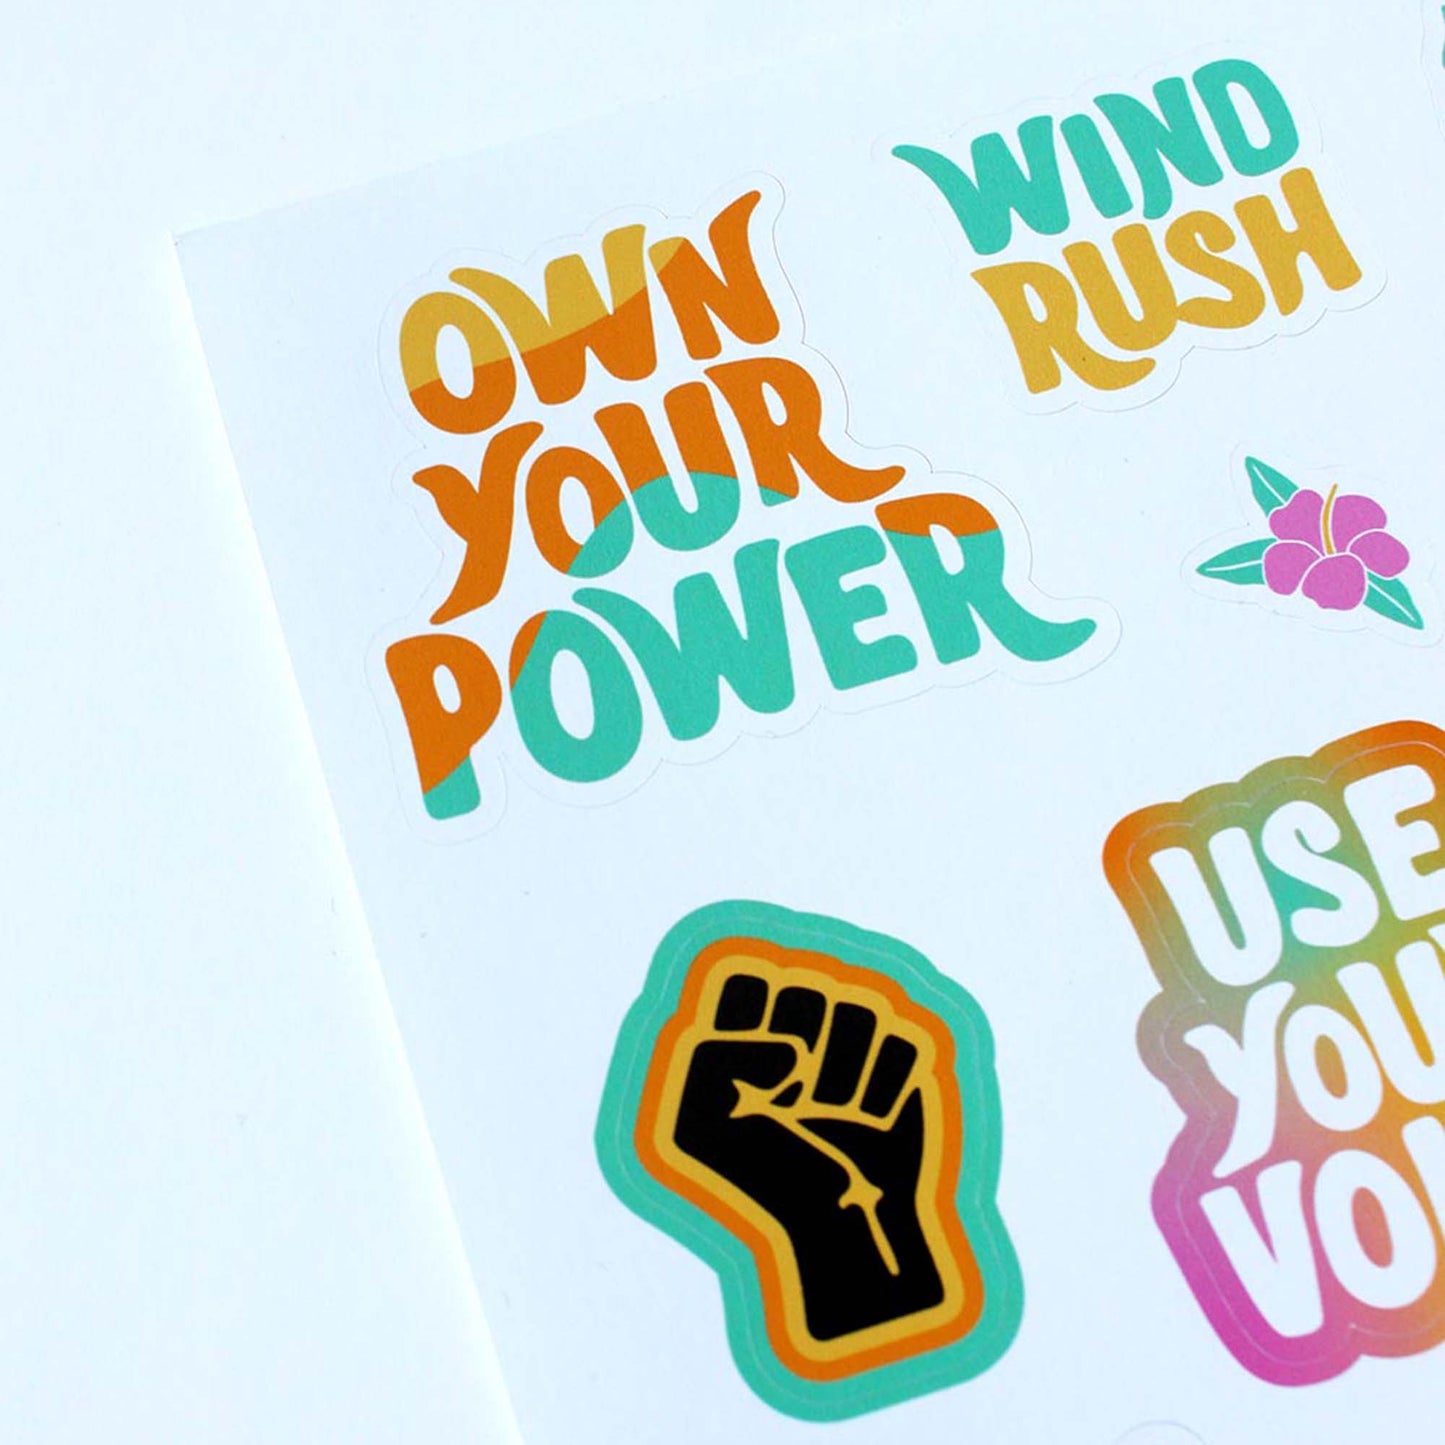 Own Your Power Sticker Sheet